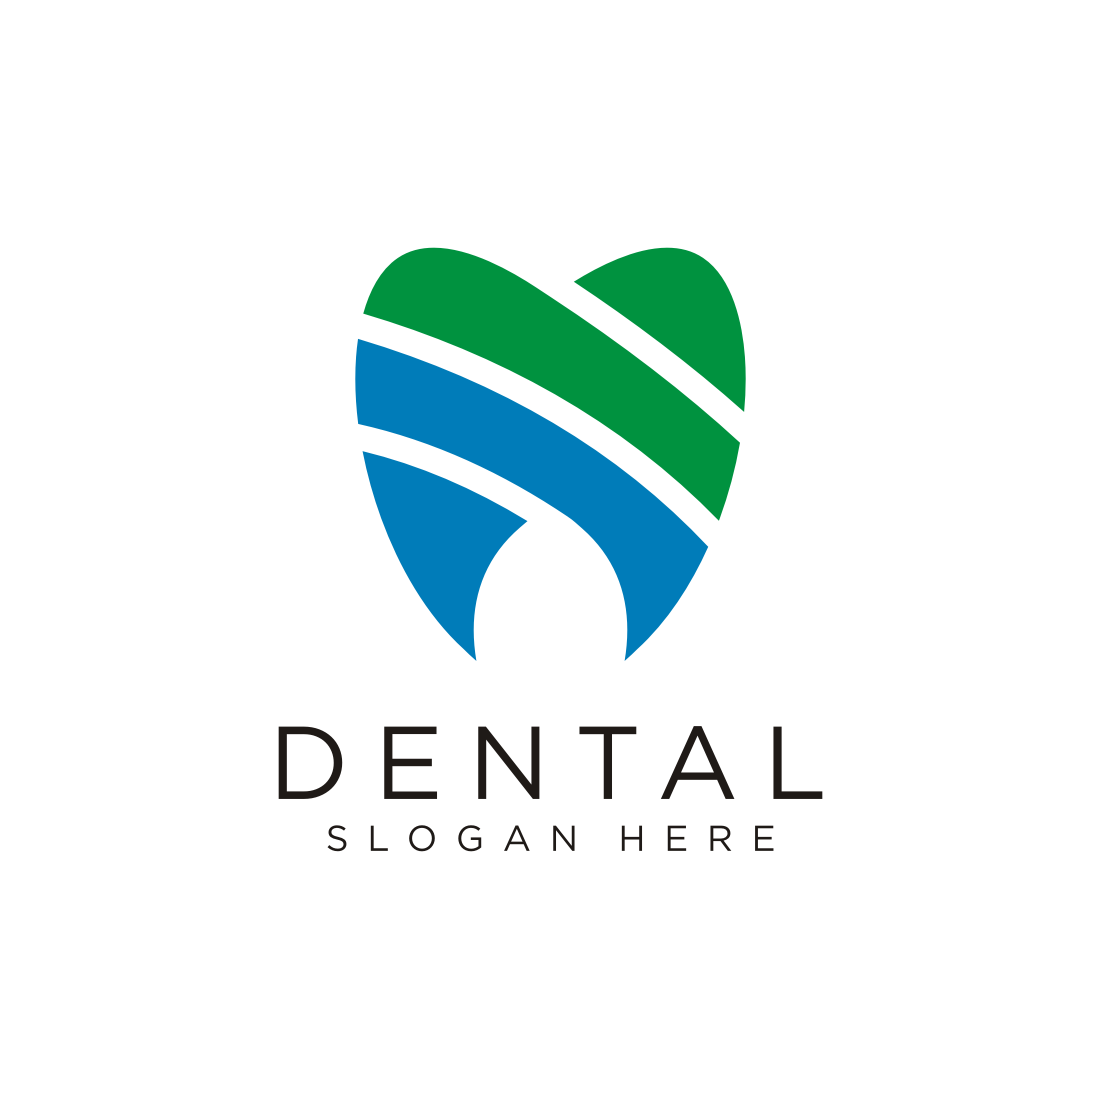 dental logo design vector cover image.